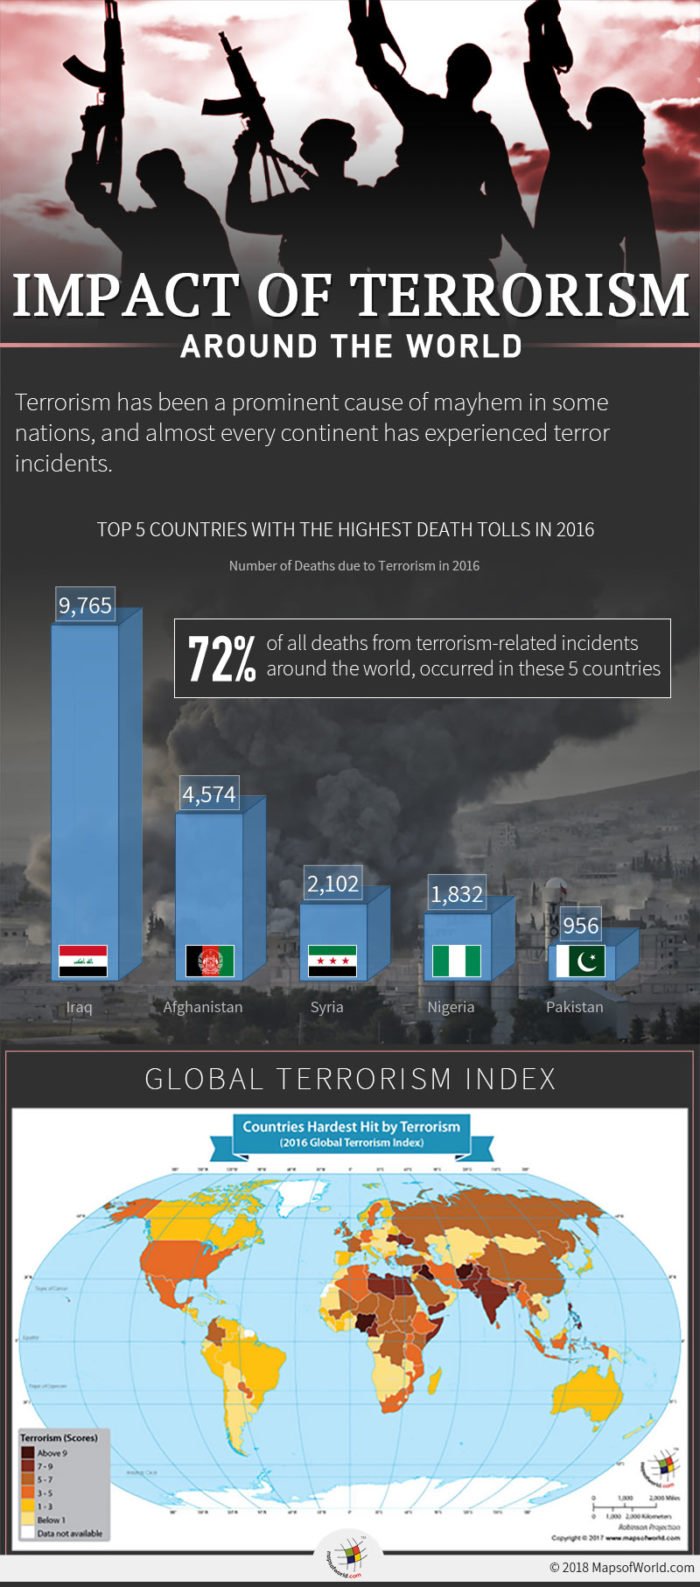 presentation of terrorism